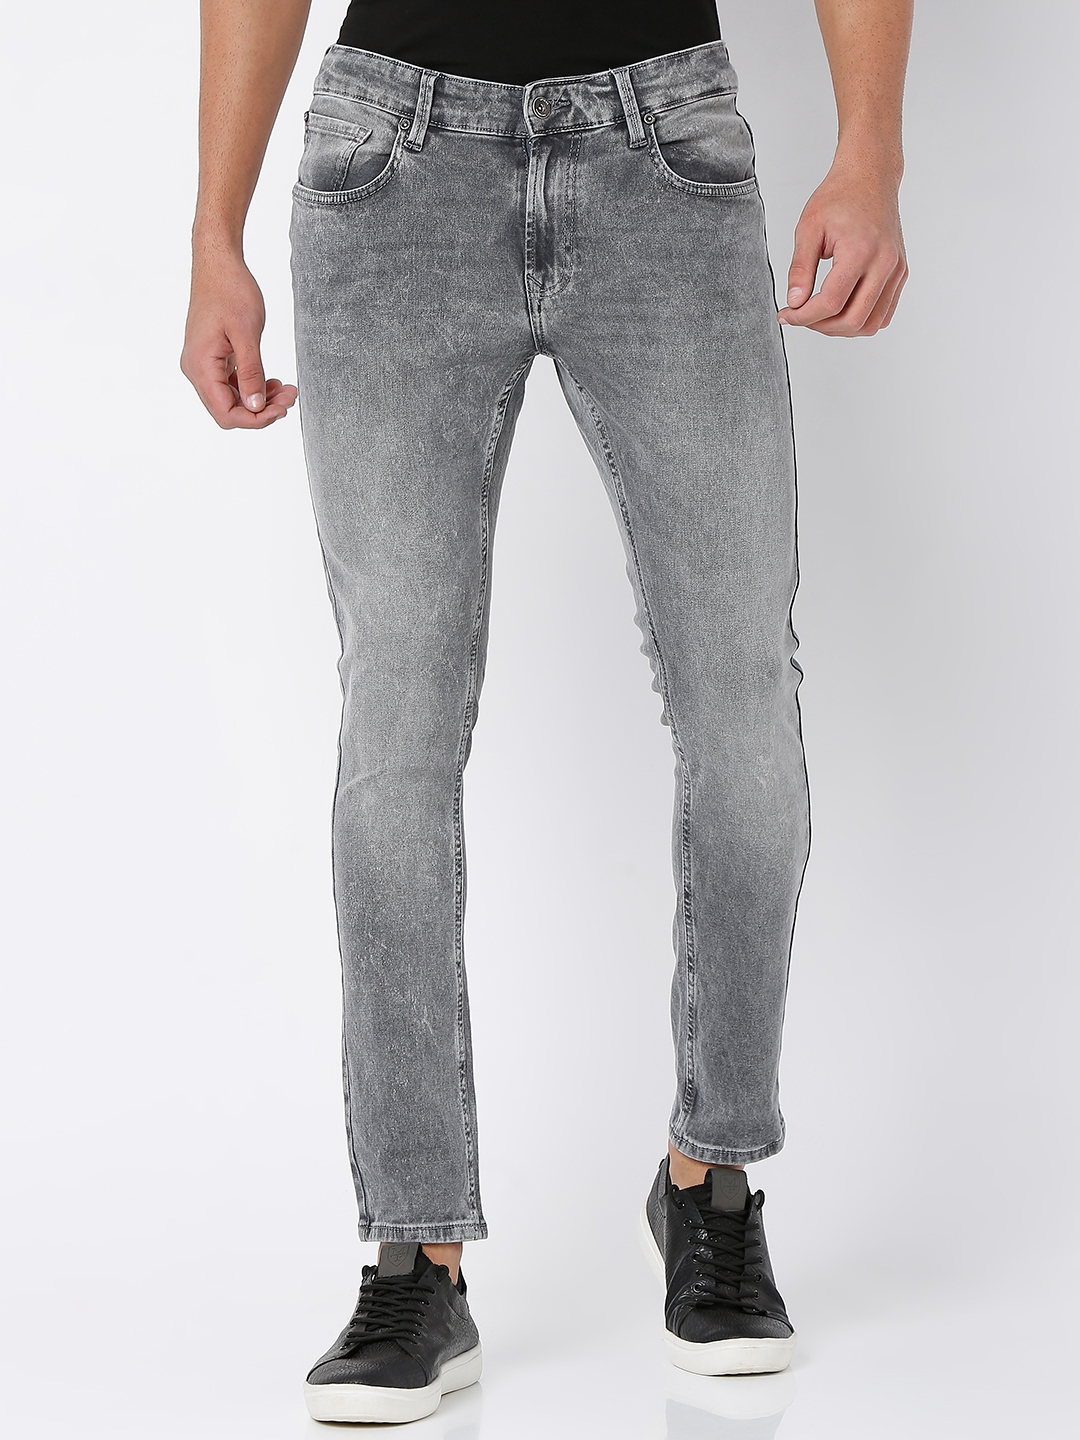 spykar | Men's Grey Cotton Solid Jeans 0